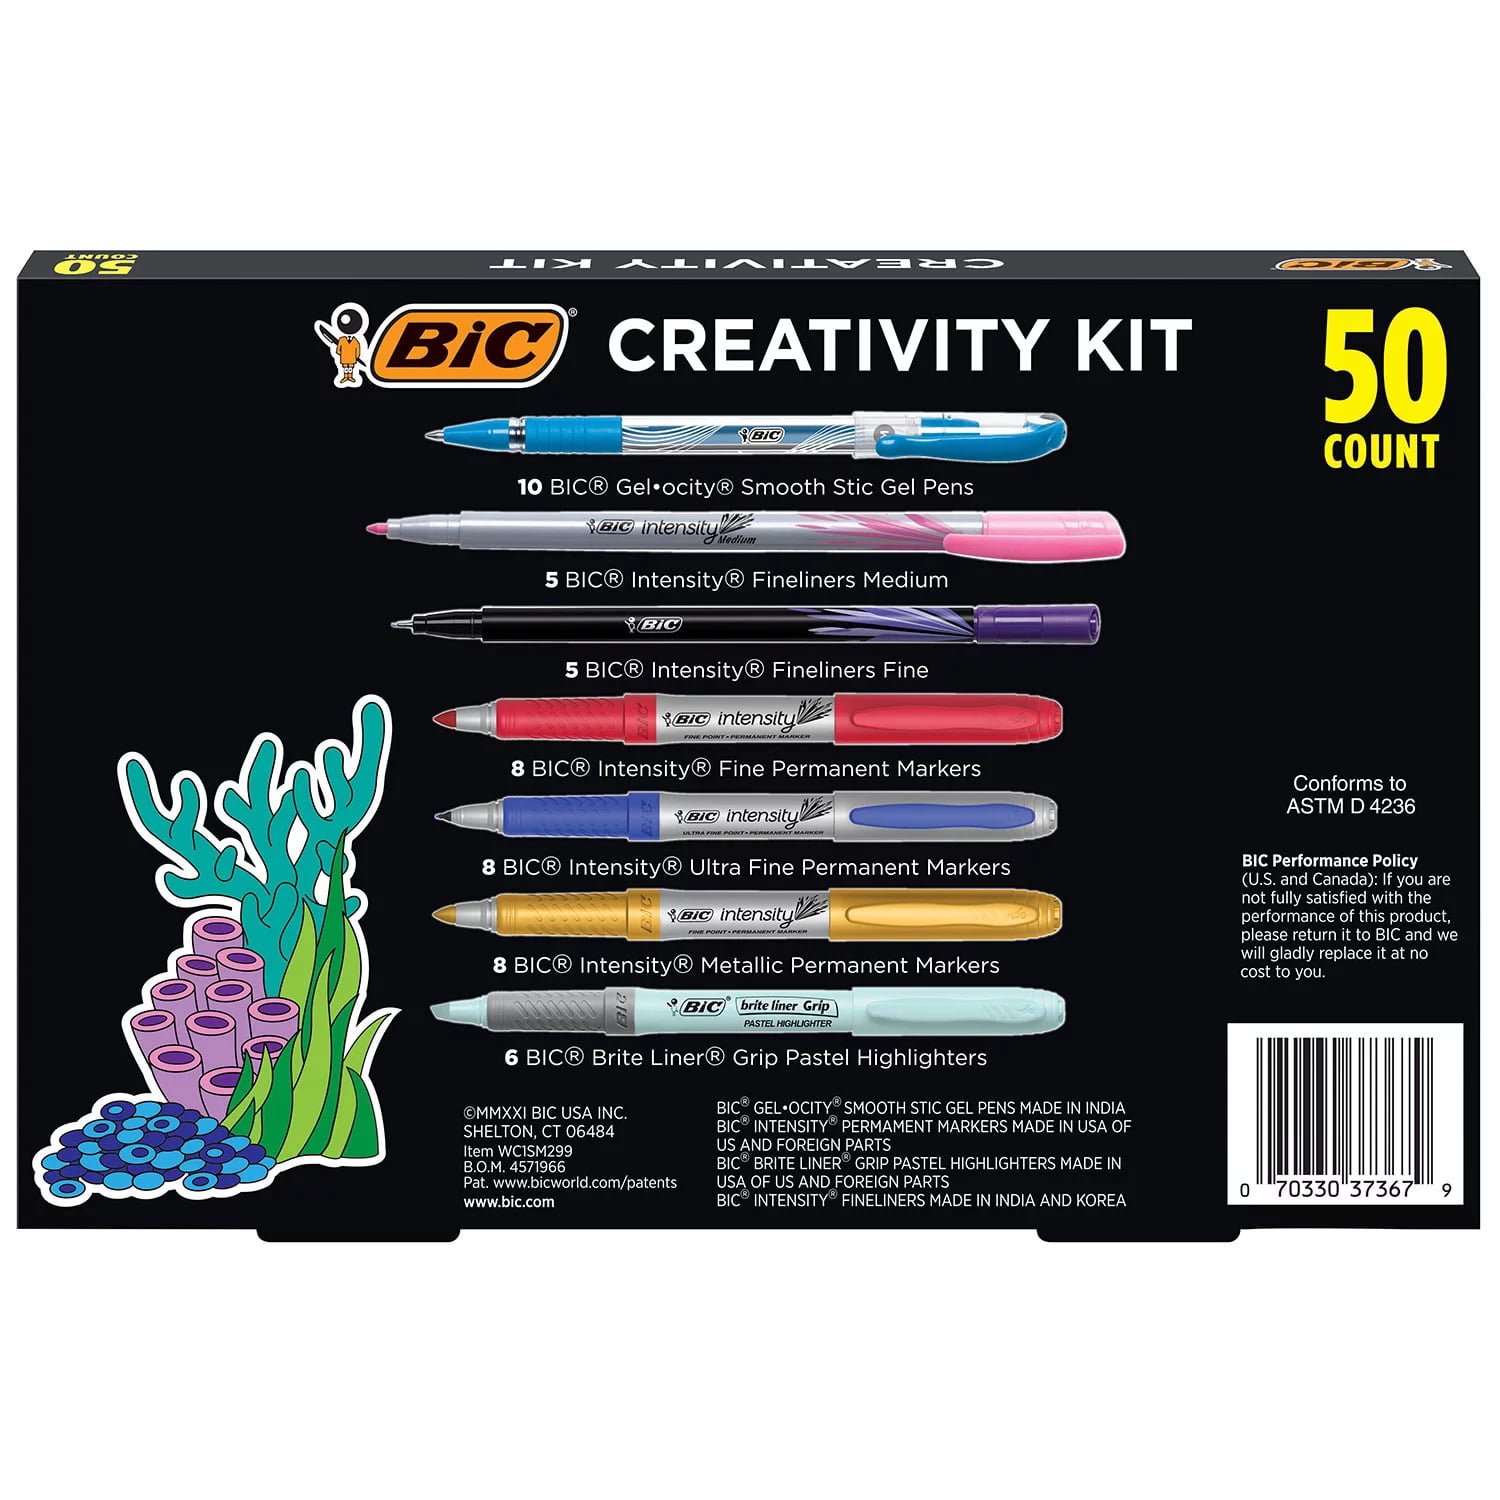 Bic Creativity Kit 50 Count